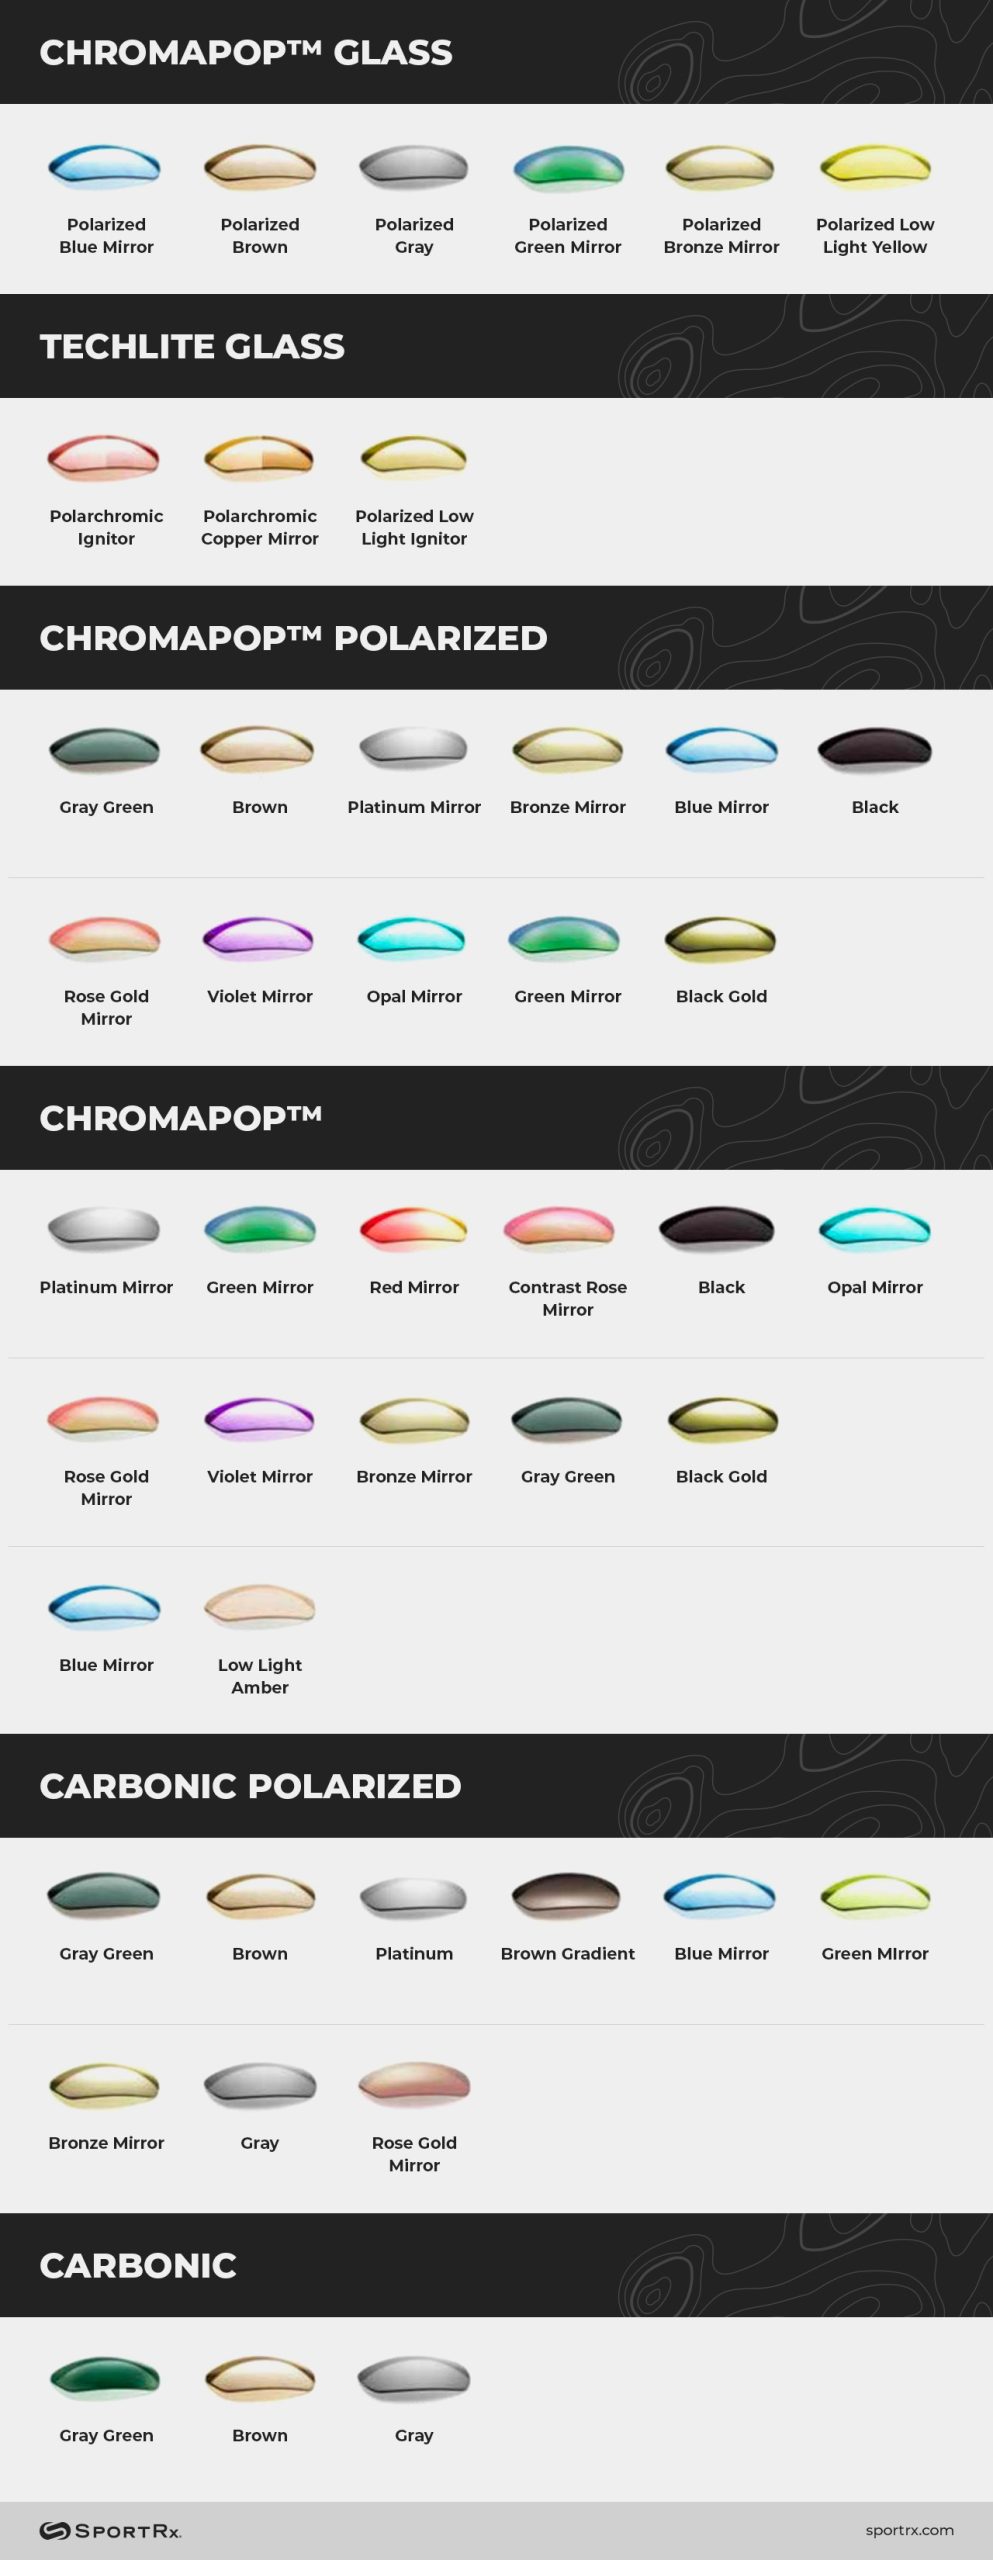 ChromaPop Lens Guide